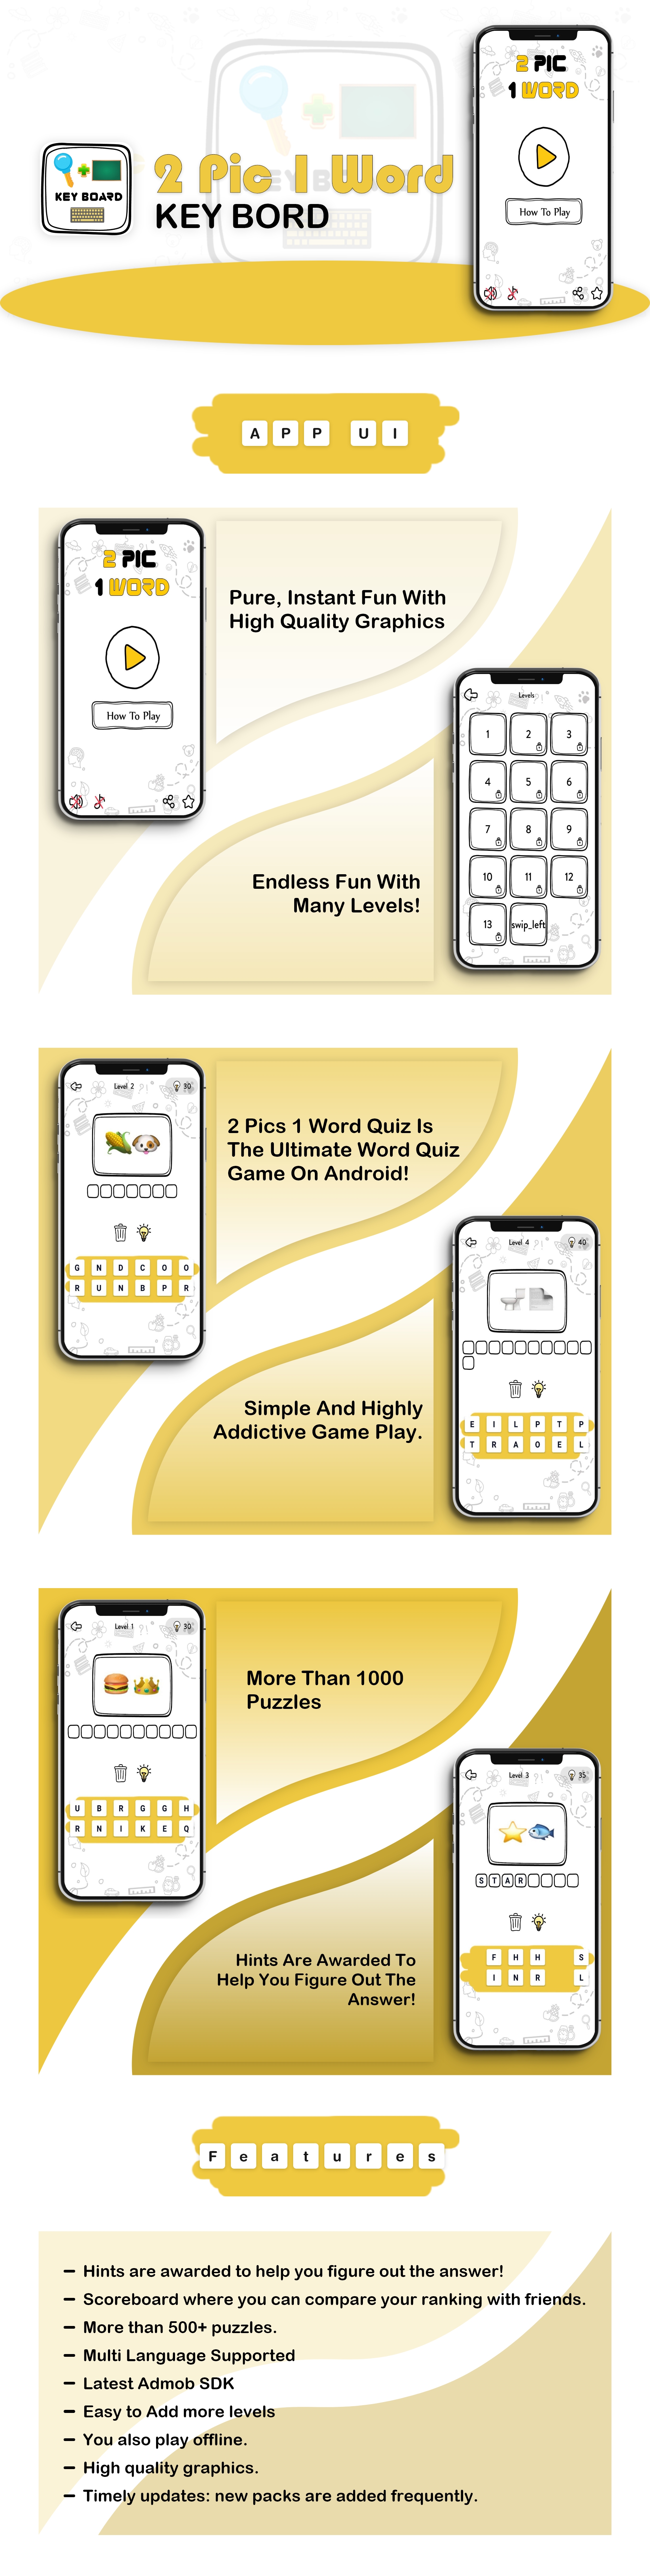 2 Pics 1 Word Quiz - Best Kids Learning Game -Educational App - Brain Game - 1